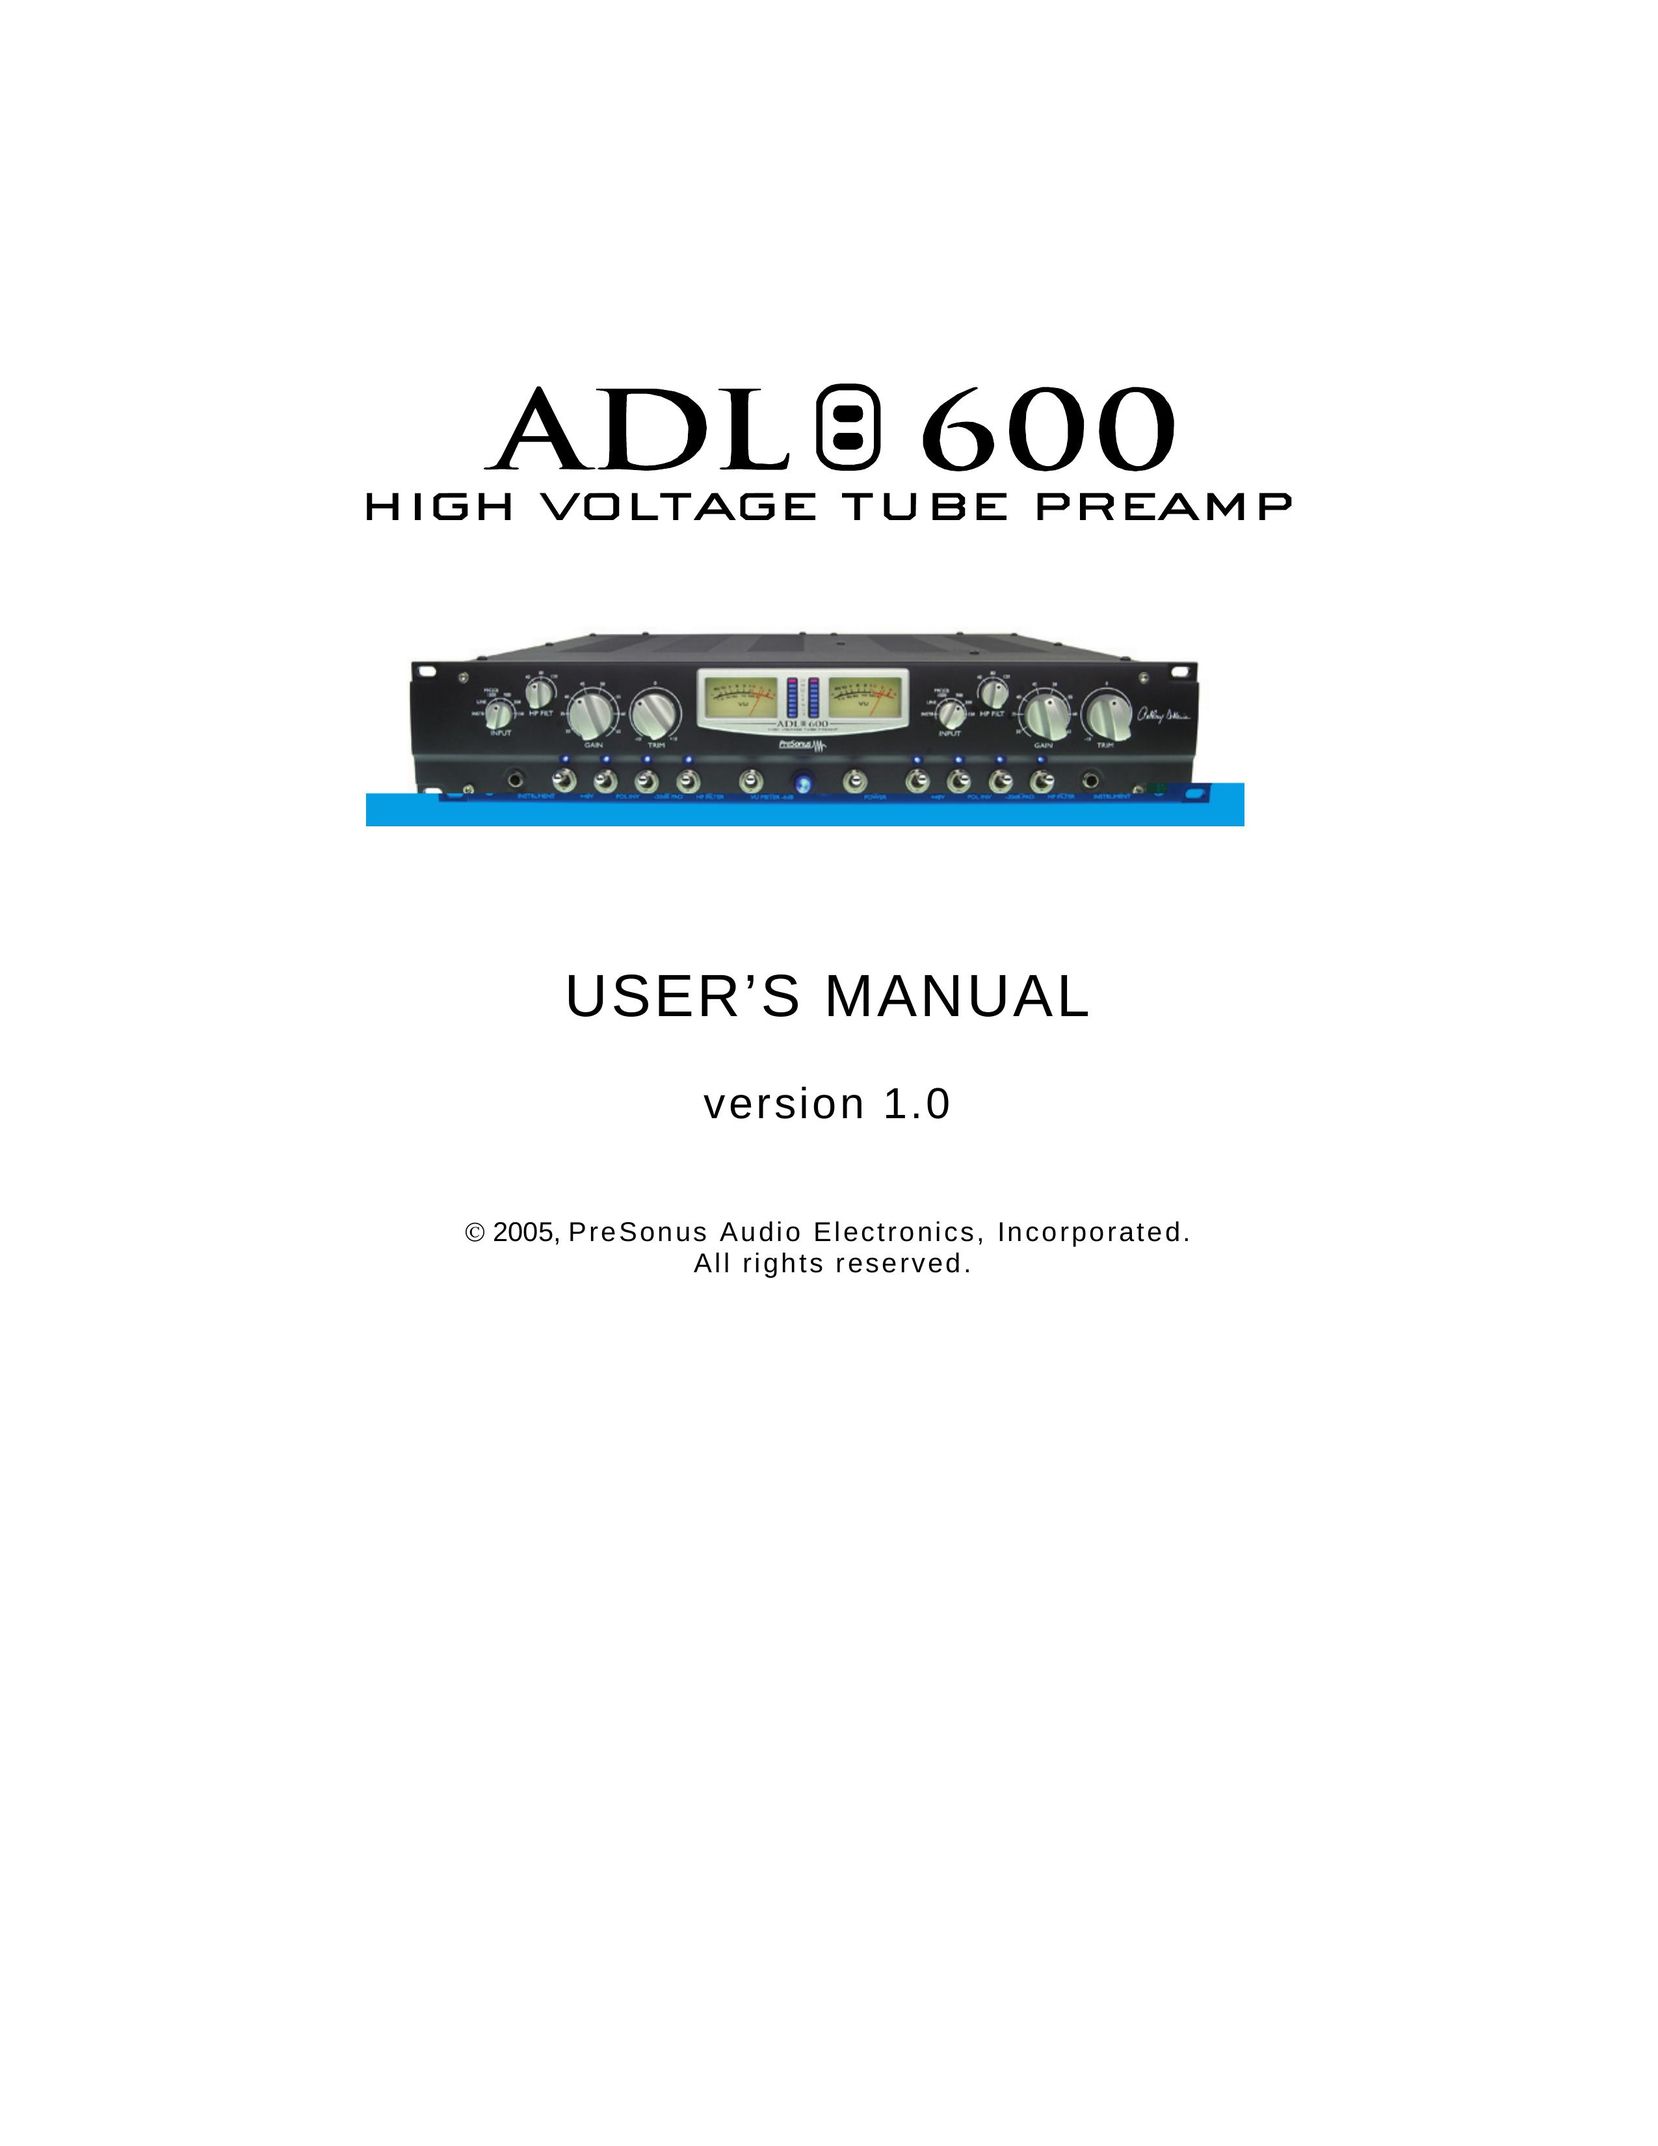 Presonus Audio electronic ADl 600 Stereo Amplifier User Manual